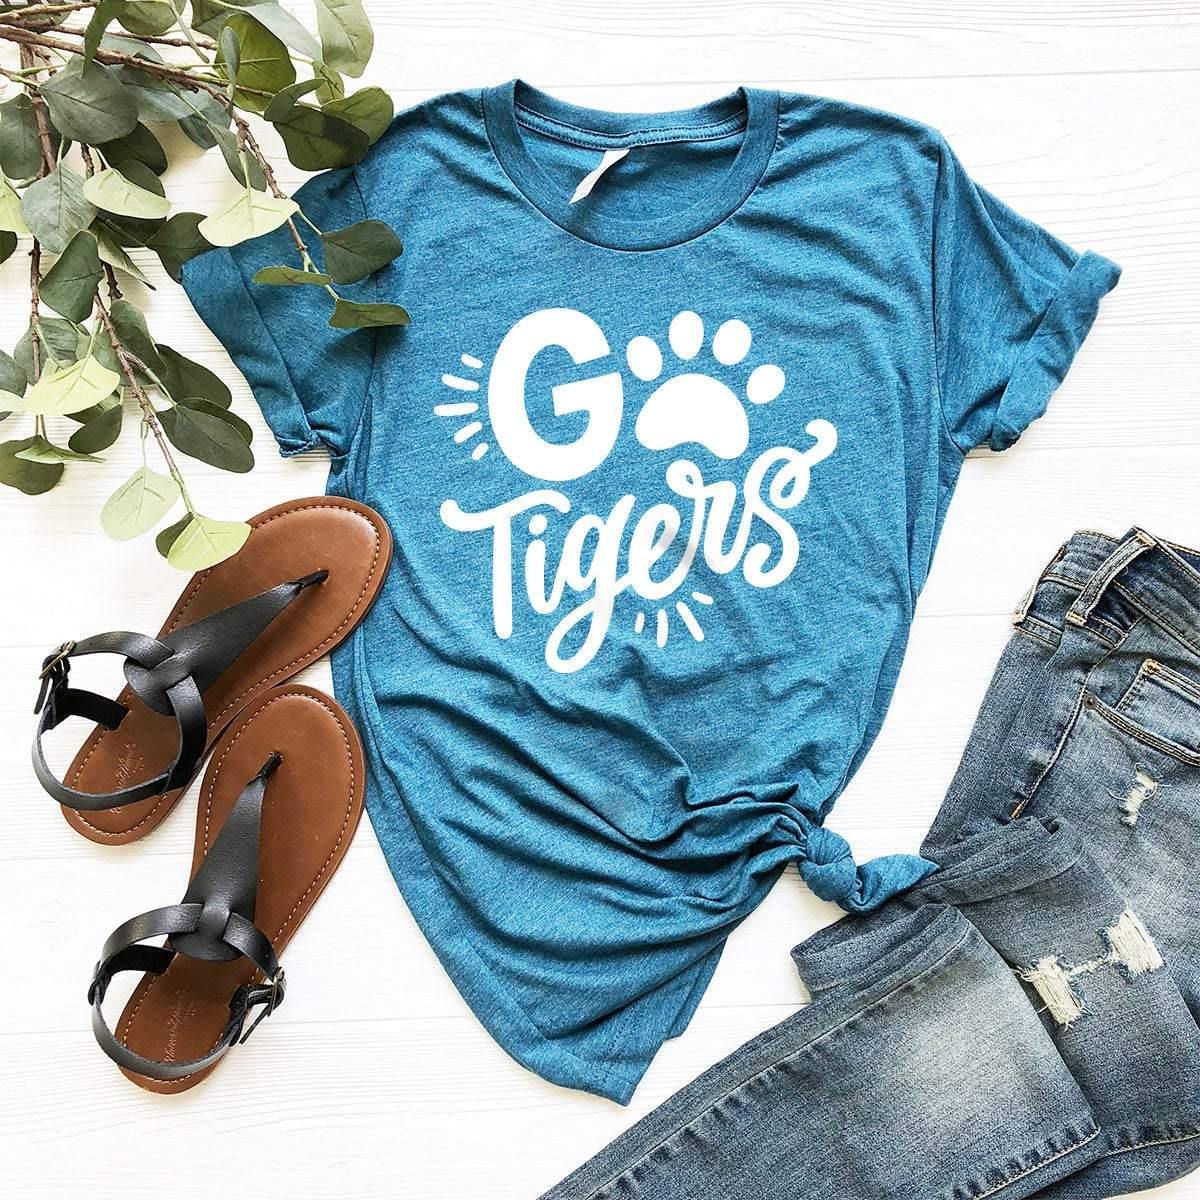 Football Go Tigers T-Shirt, Funny Tigers Shirt, Tigers School Spirit Shirt, Clemson Tigers Go Tigers Shirt, Tiger Graphic Tee - Fastdeliverytees.com